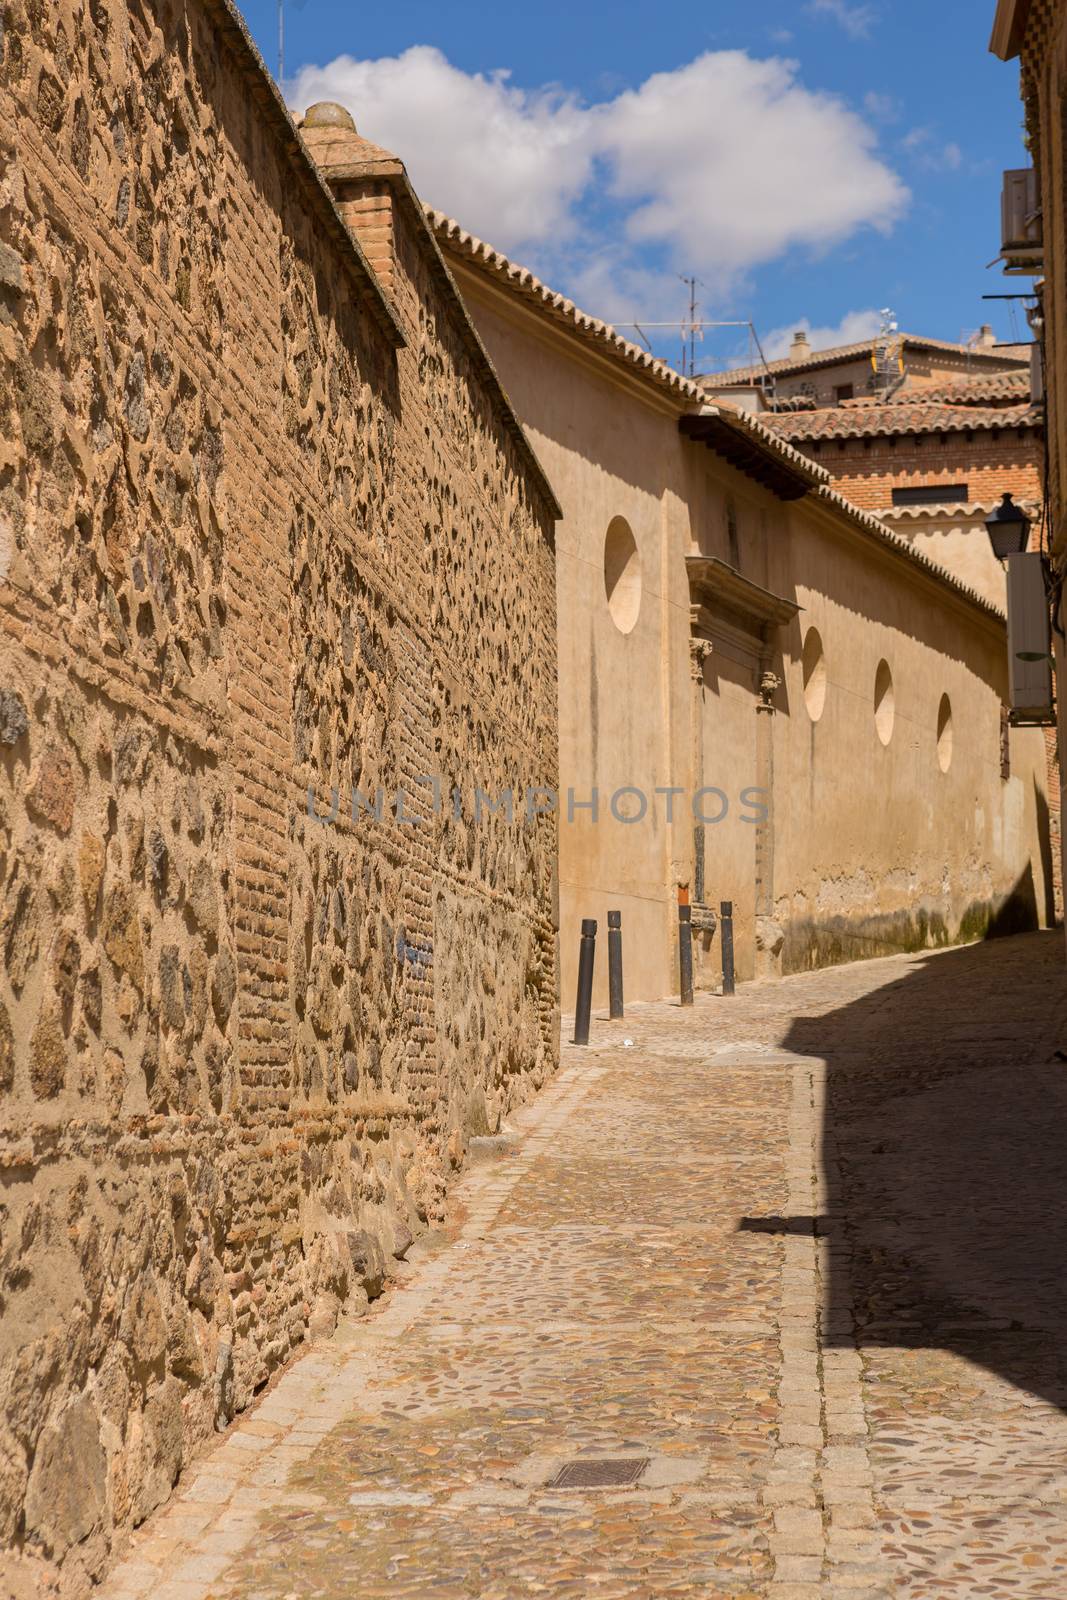 Toledo narrow street in Castile La Mancha, Spain